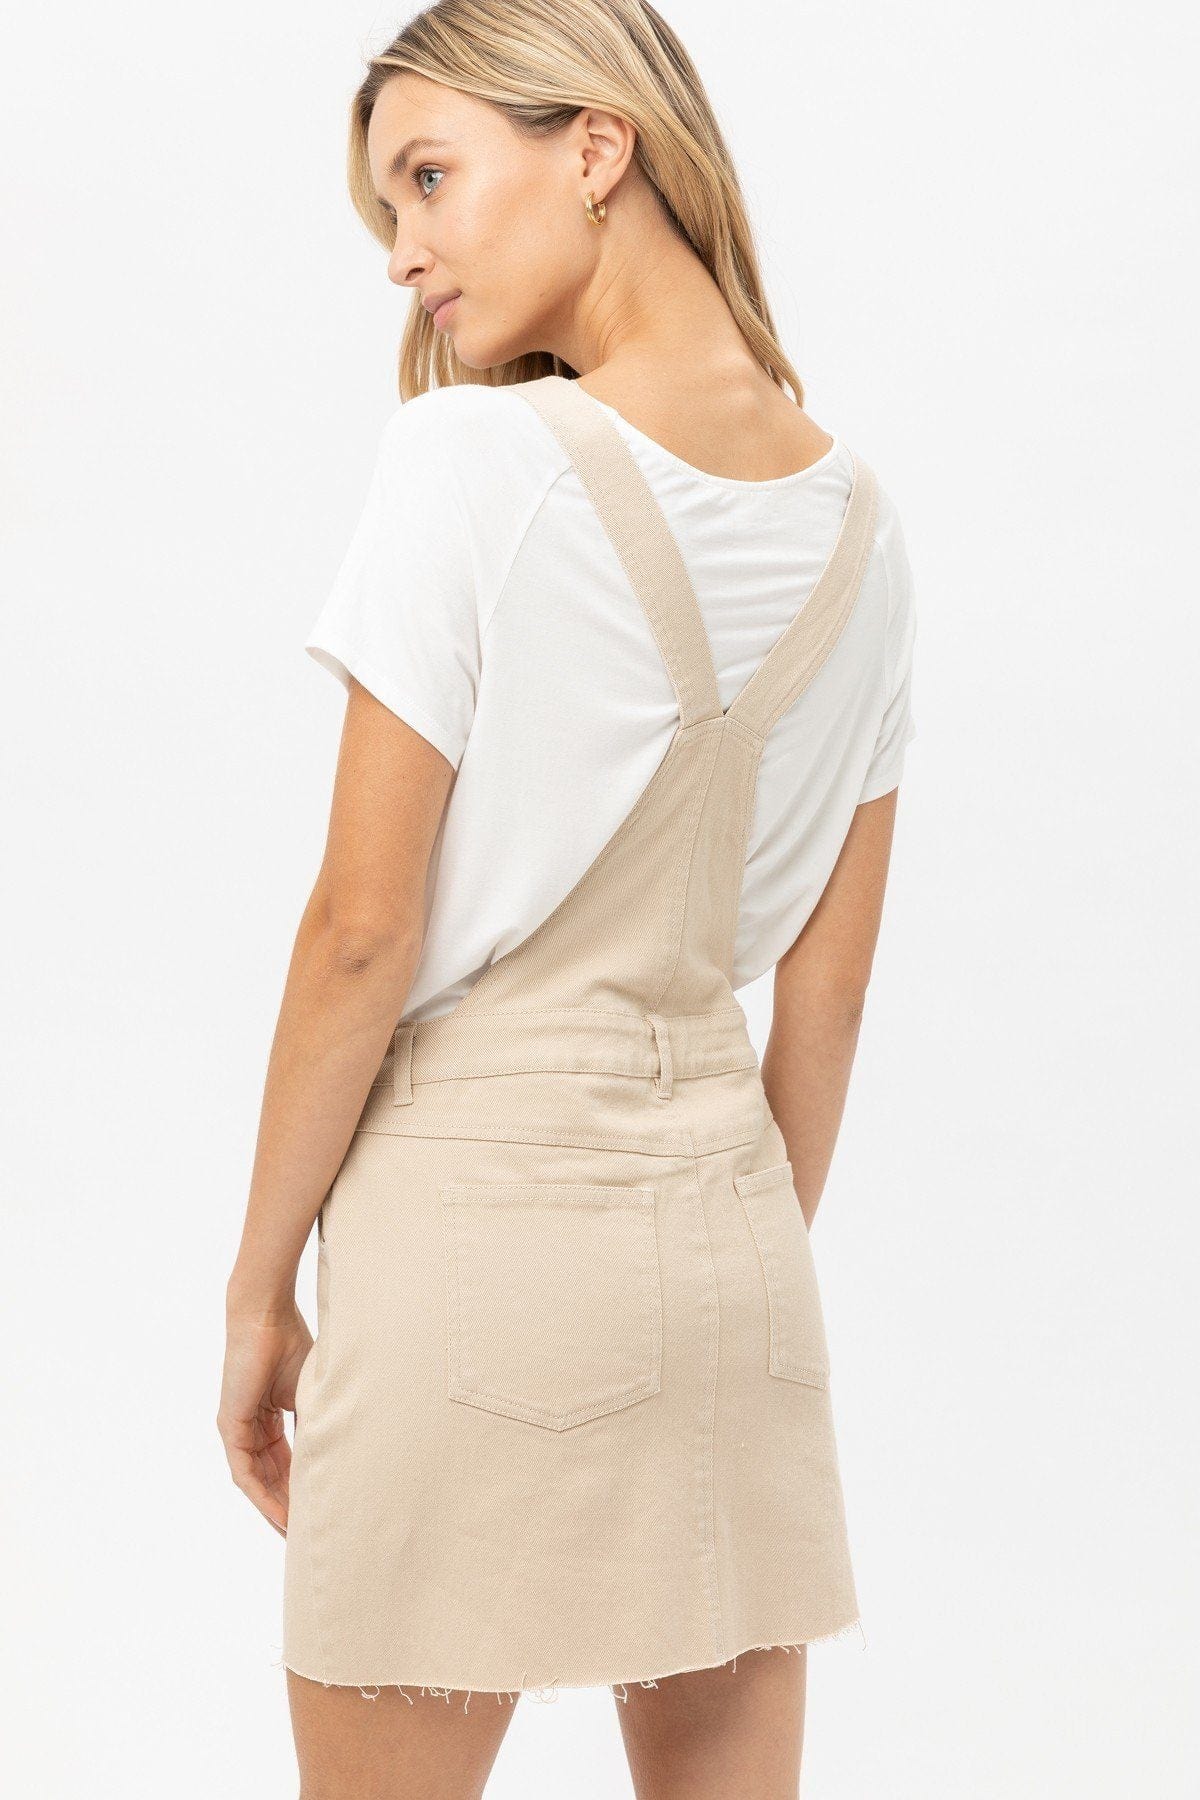 Square Neck Adjustable Shoulder Straps Dress - Fashion Quality Boutik